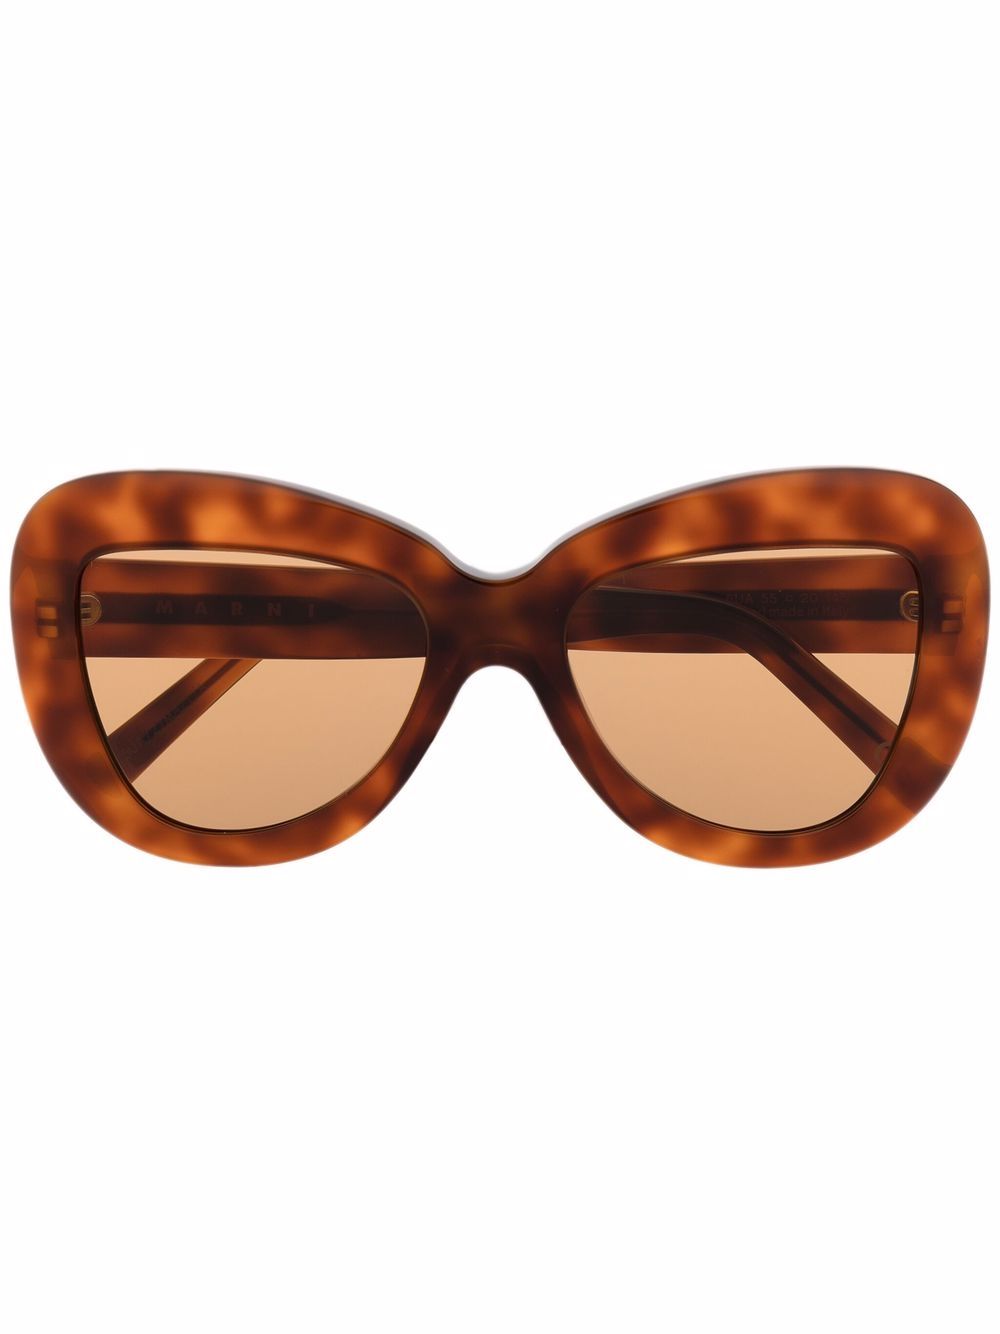 Marni Eyewear x Marni Elephant Island tortoiseshell sunglasses - Brown von Marni Eyewear